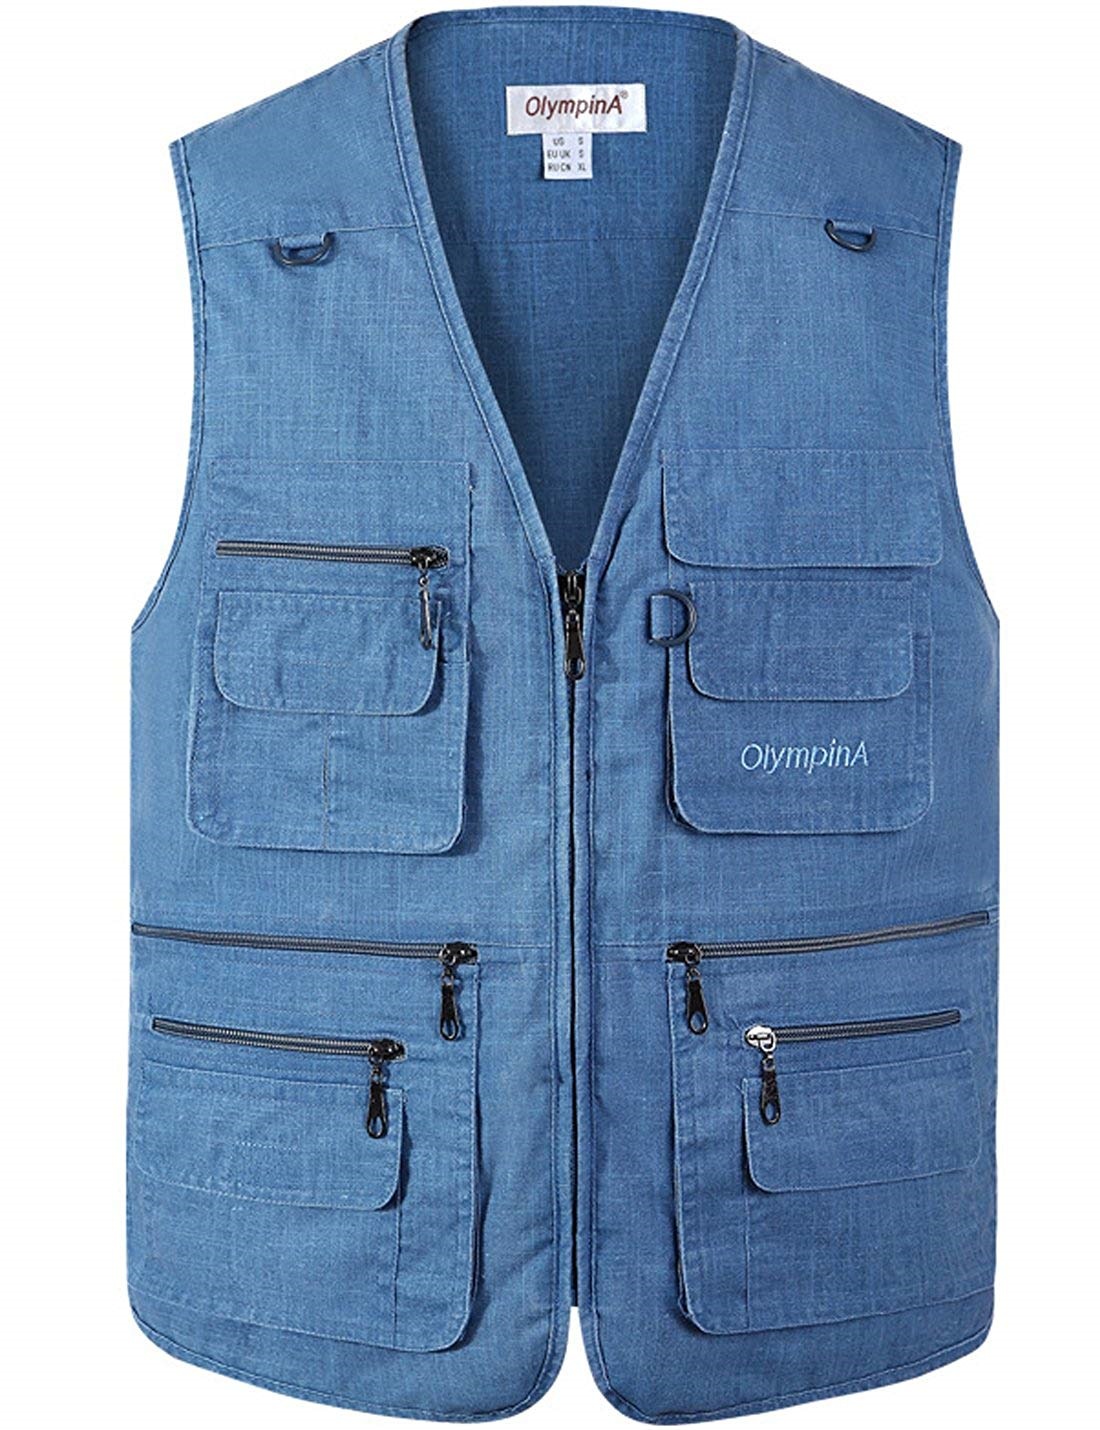 Flygo Men's Casual Cotton Outdoor Work Safari Travel Photo Vest with Multi Pockets 